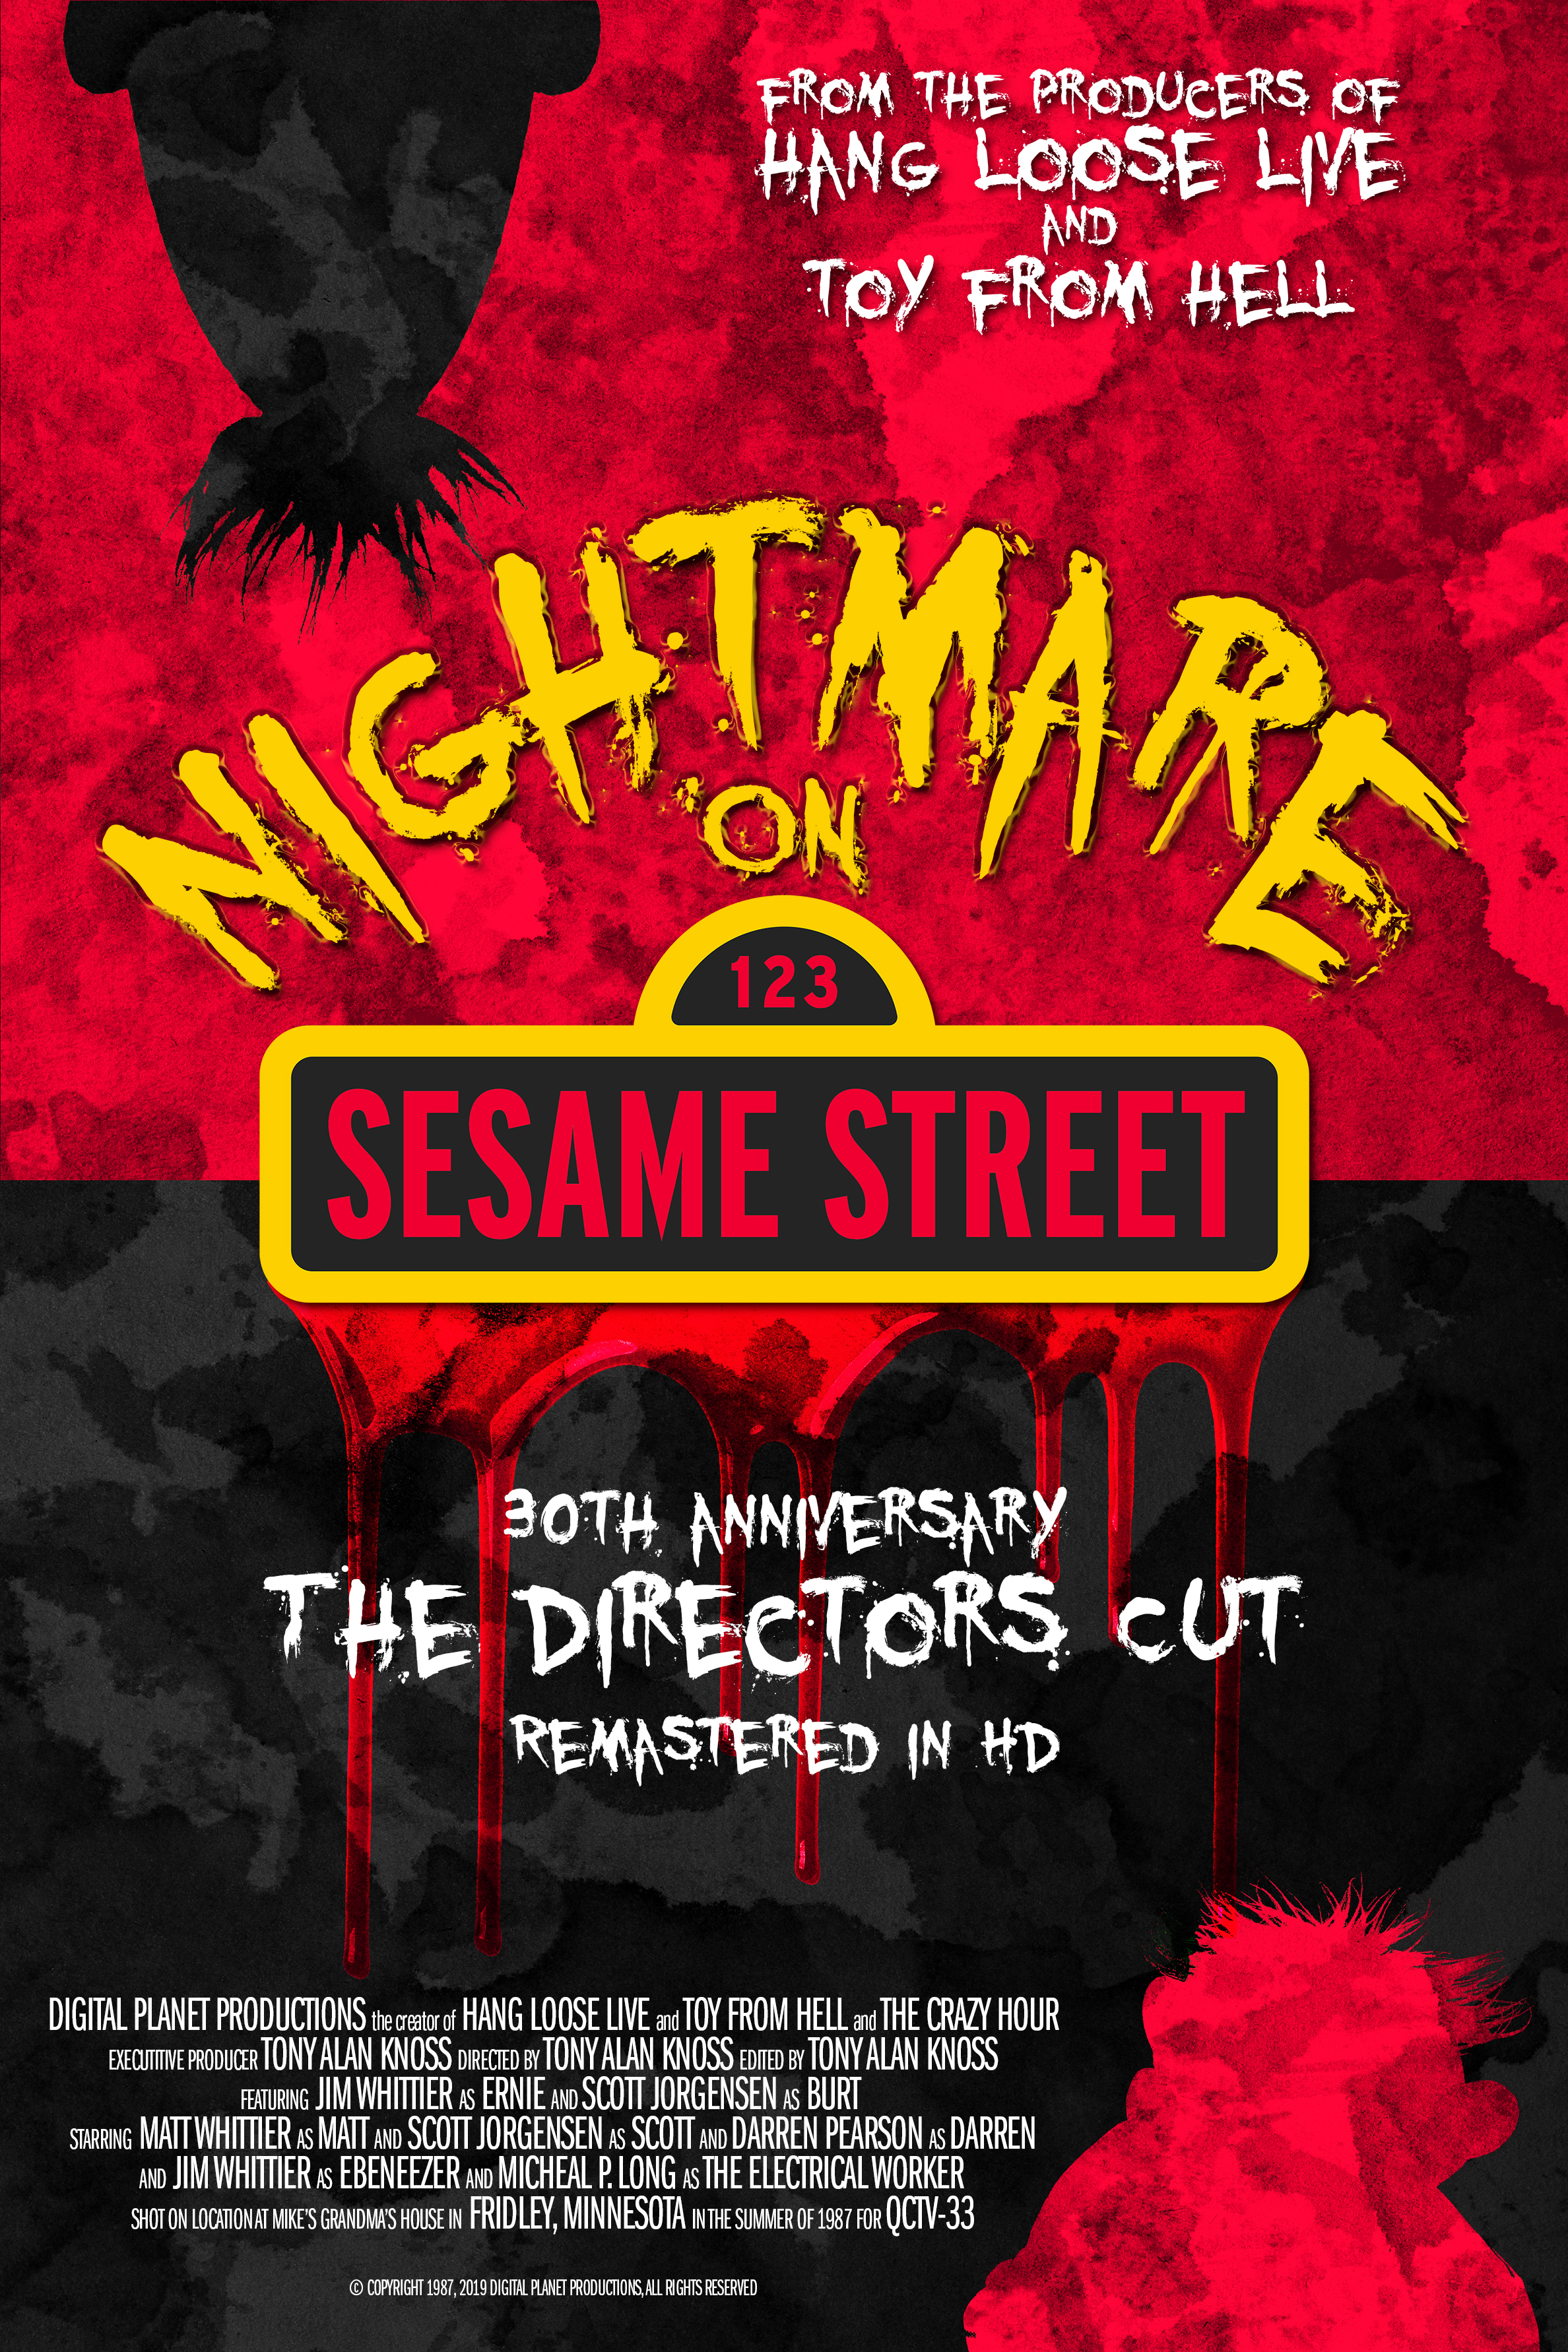 A Nightmare on Sesame Street (1987) starring Matt Whittier on DVD on DVD